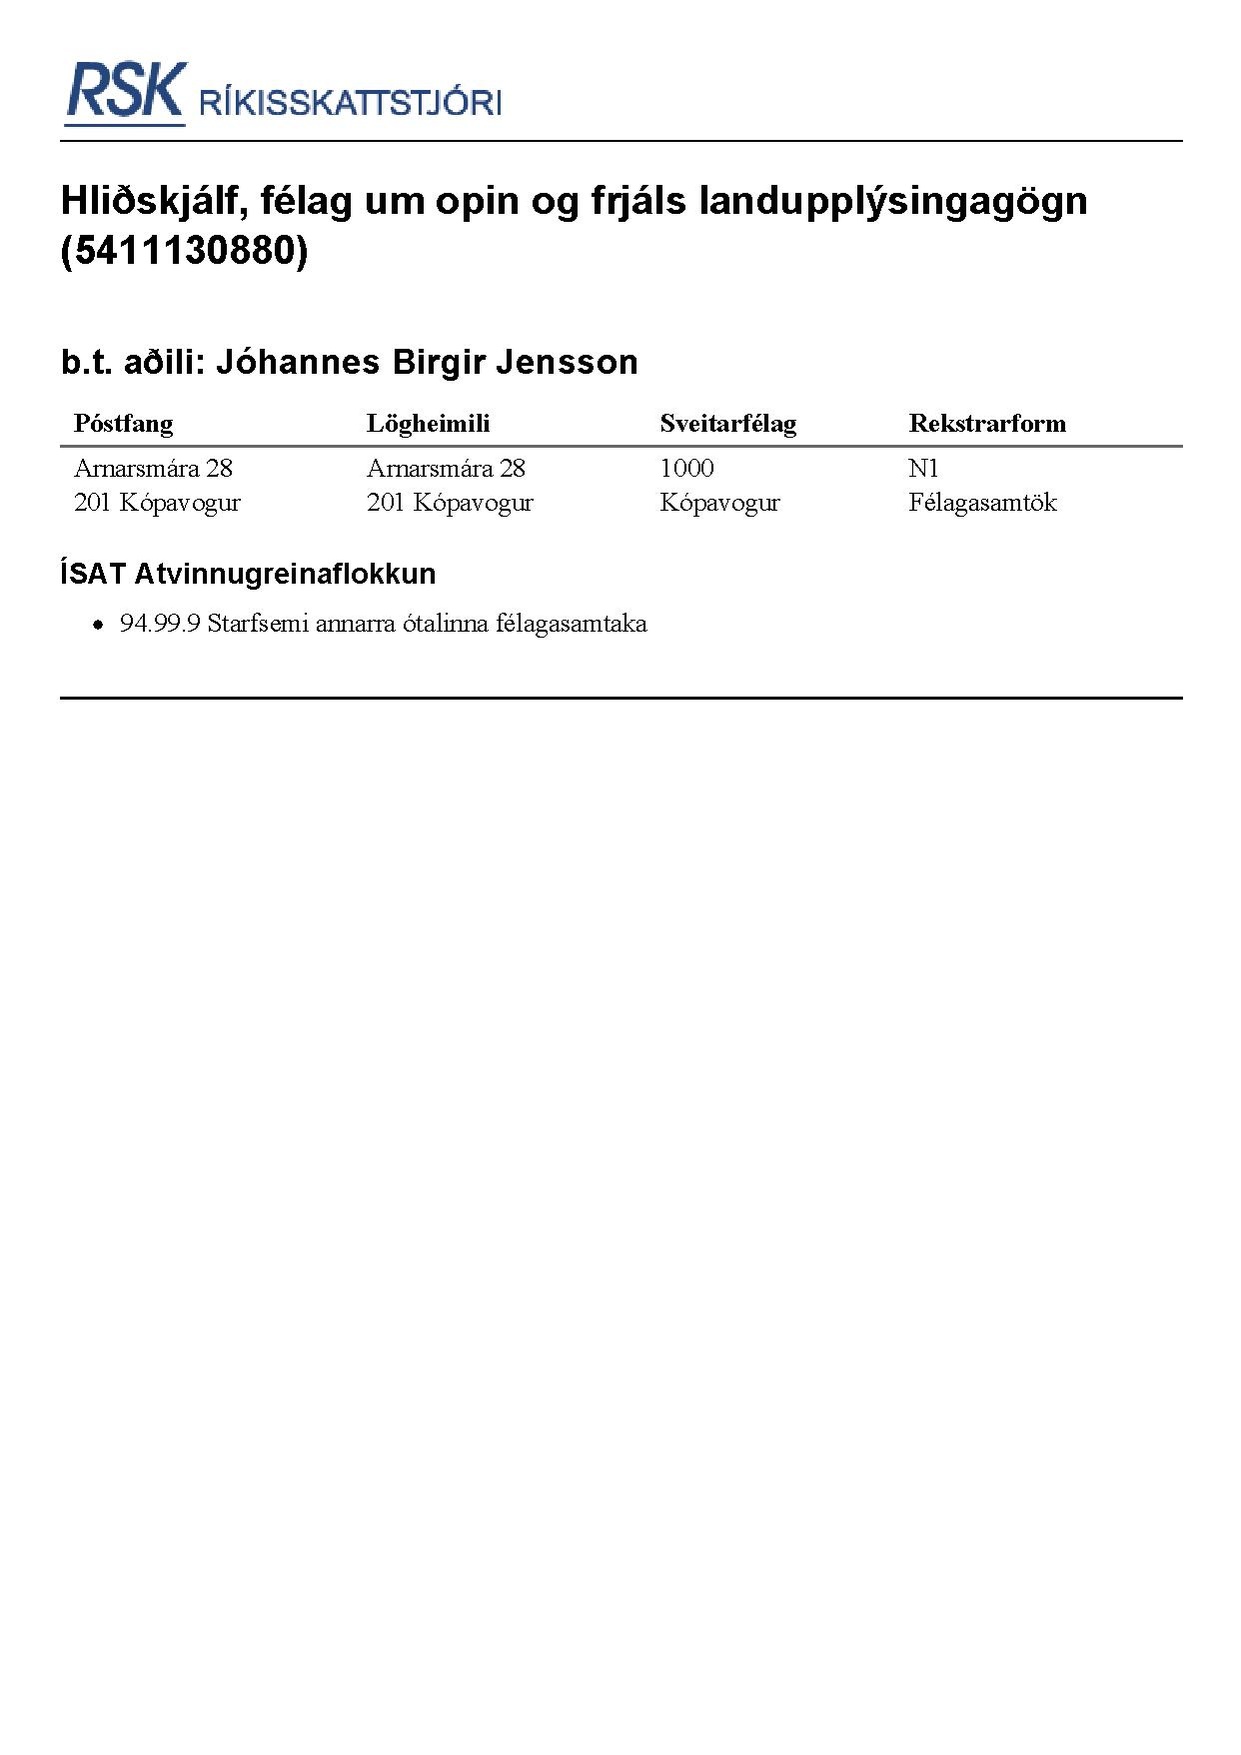 Trade registry entry - Hlidskjalf.pdf